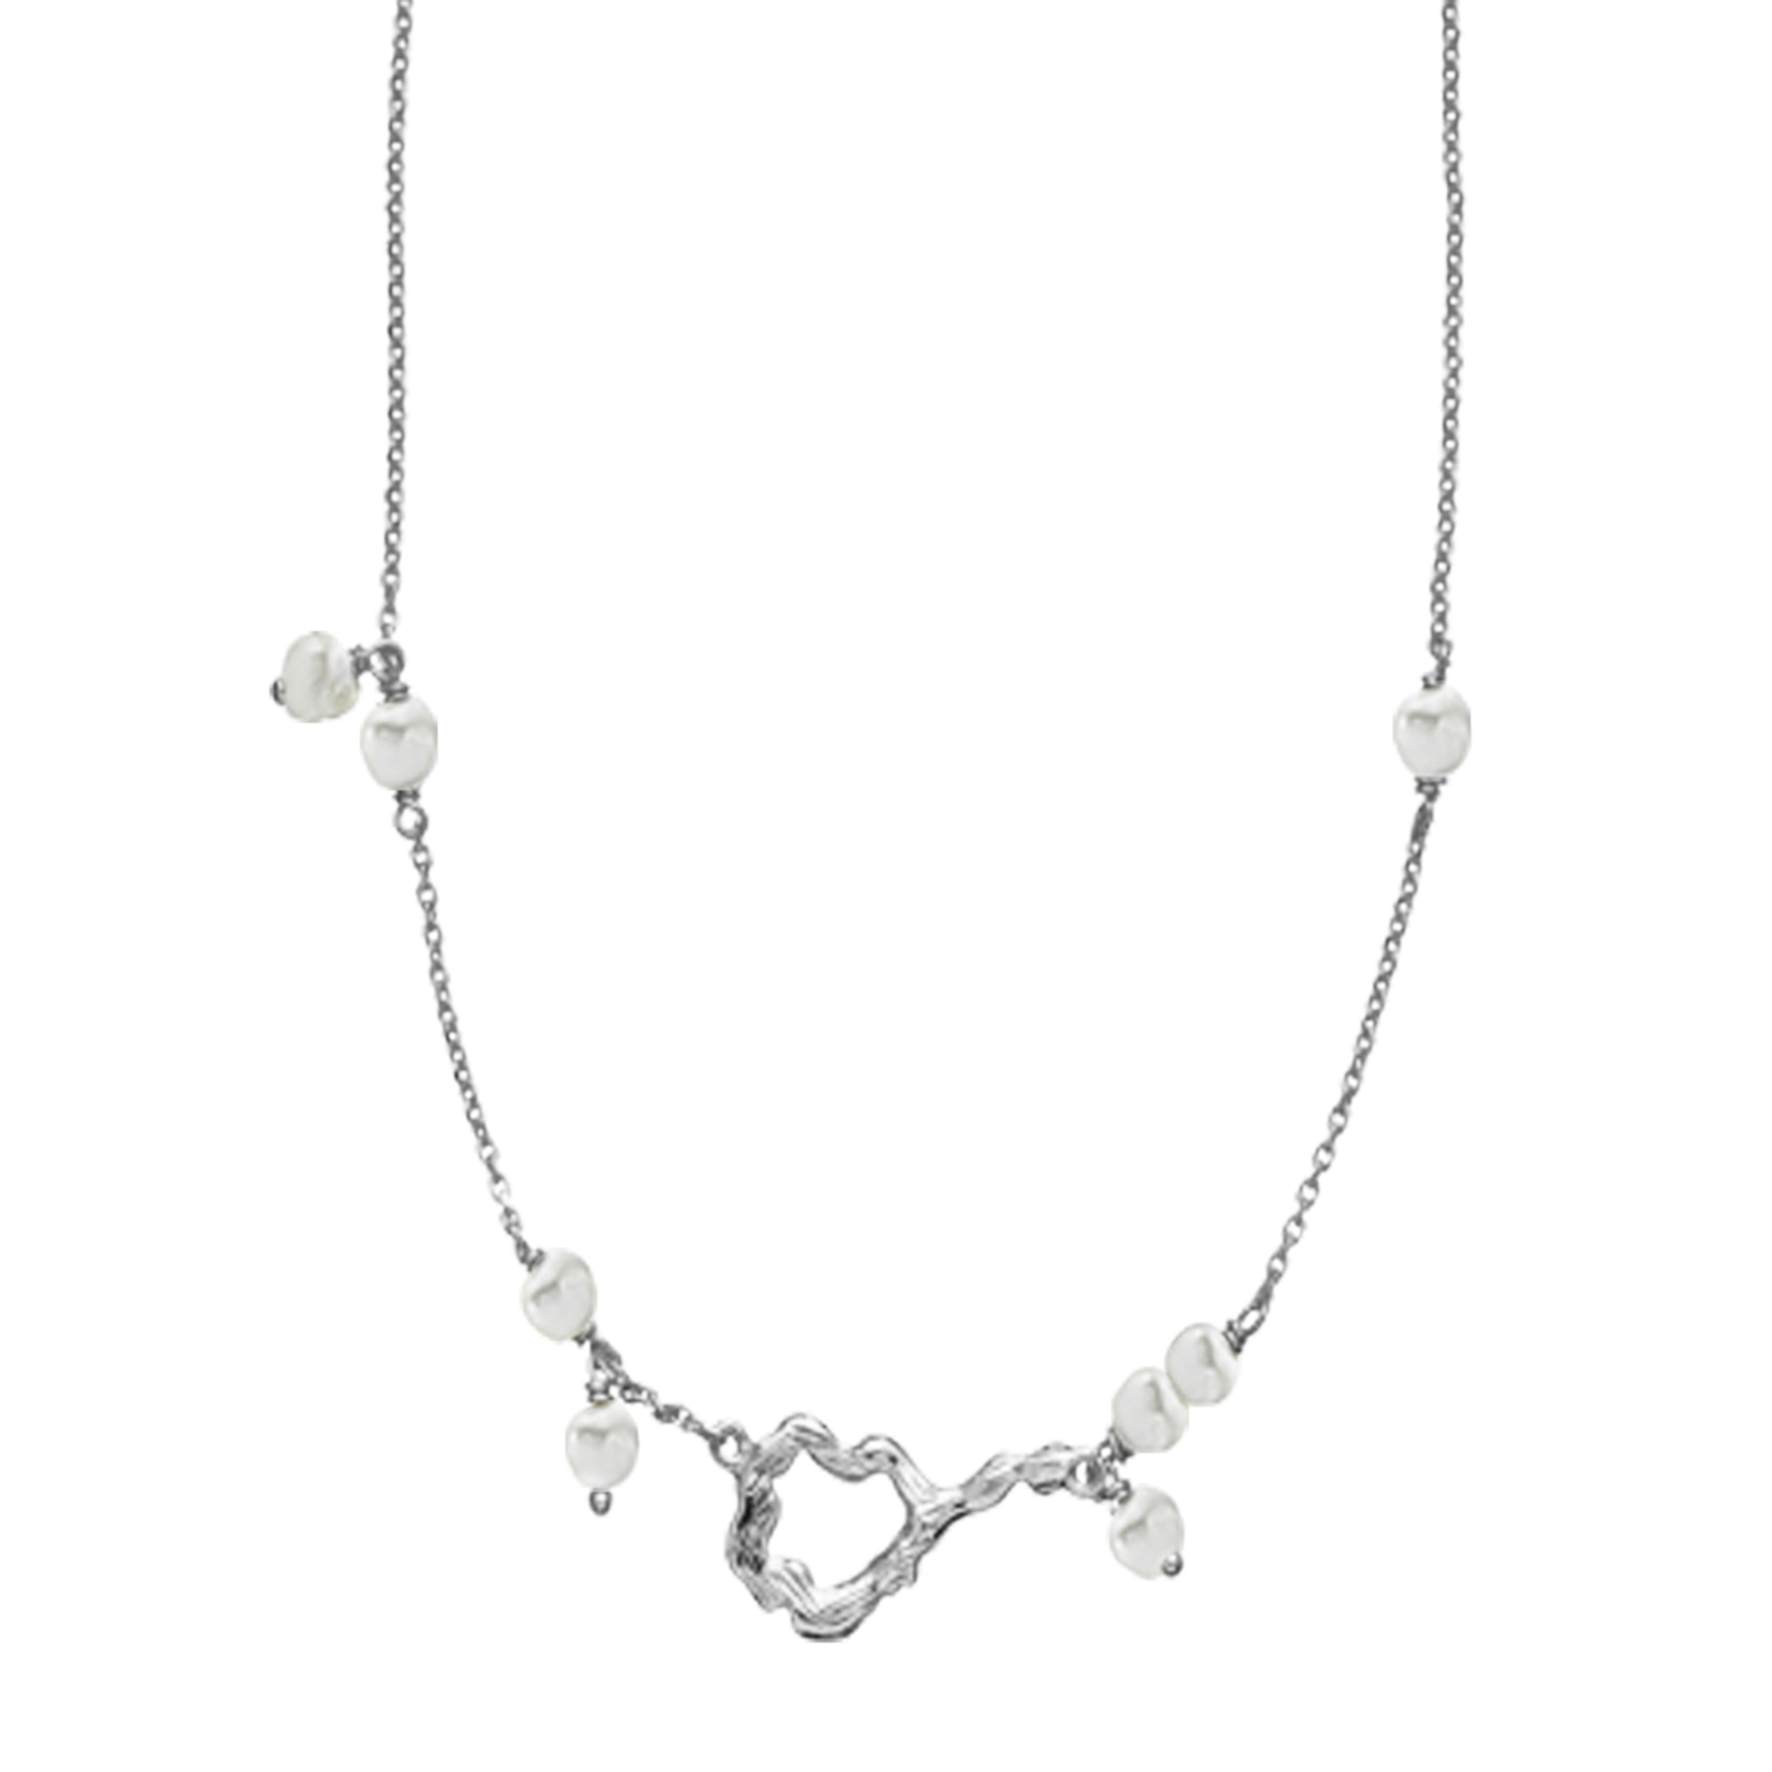 Lærke Bentsen By Sistie Necklace With Pearls von Sistie in Silber Sterling 925|Freshwater Pearl